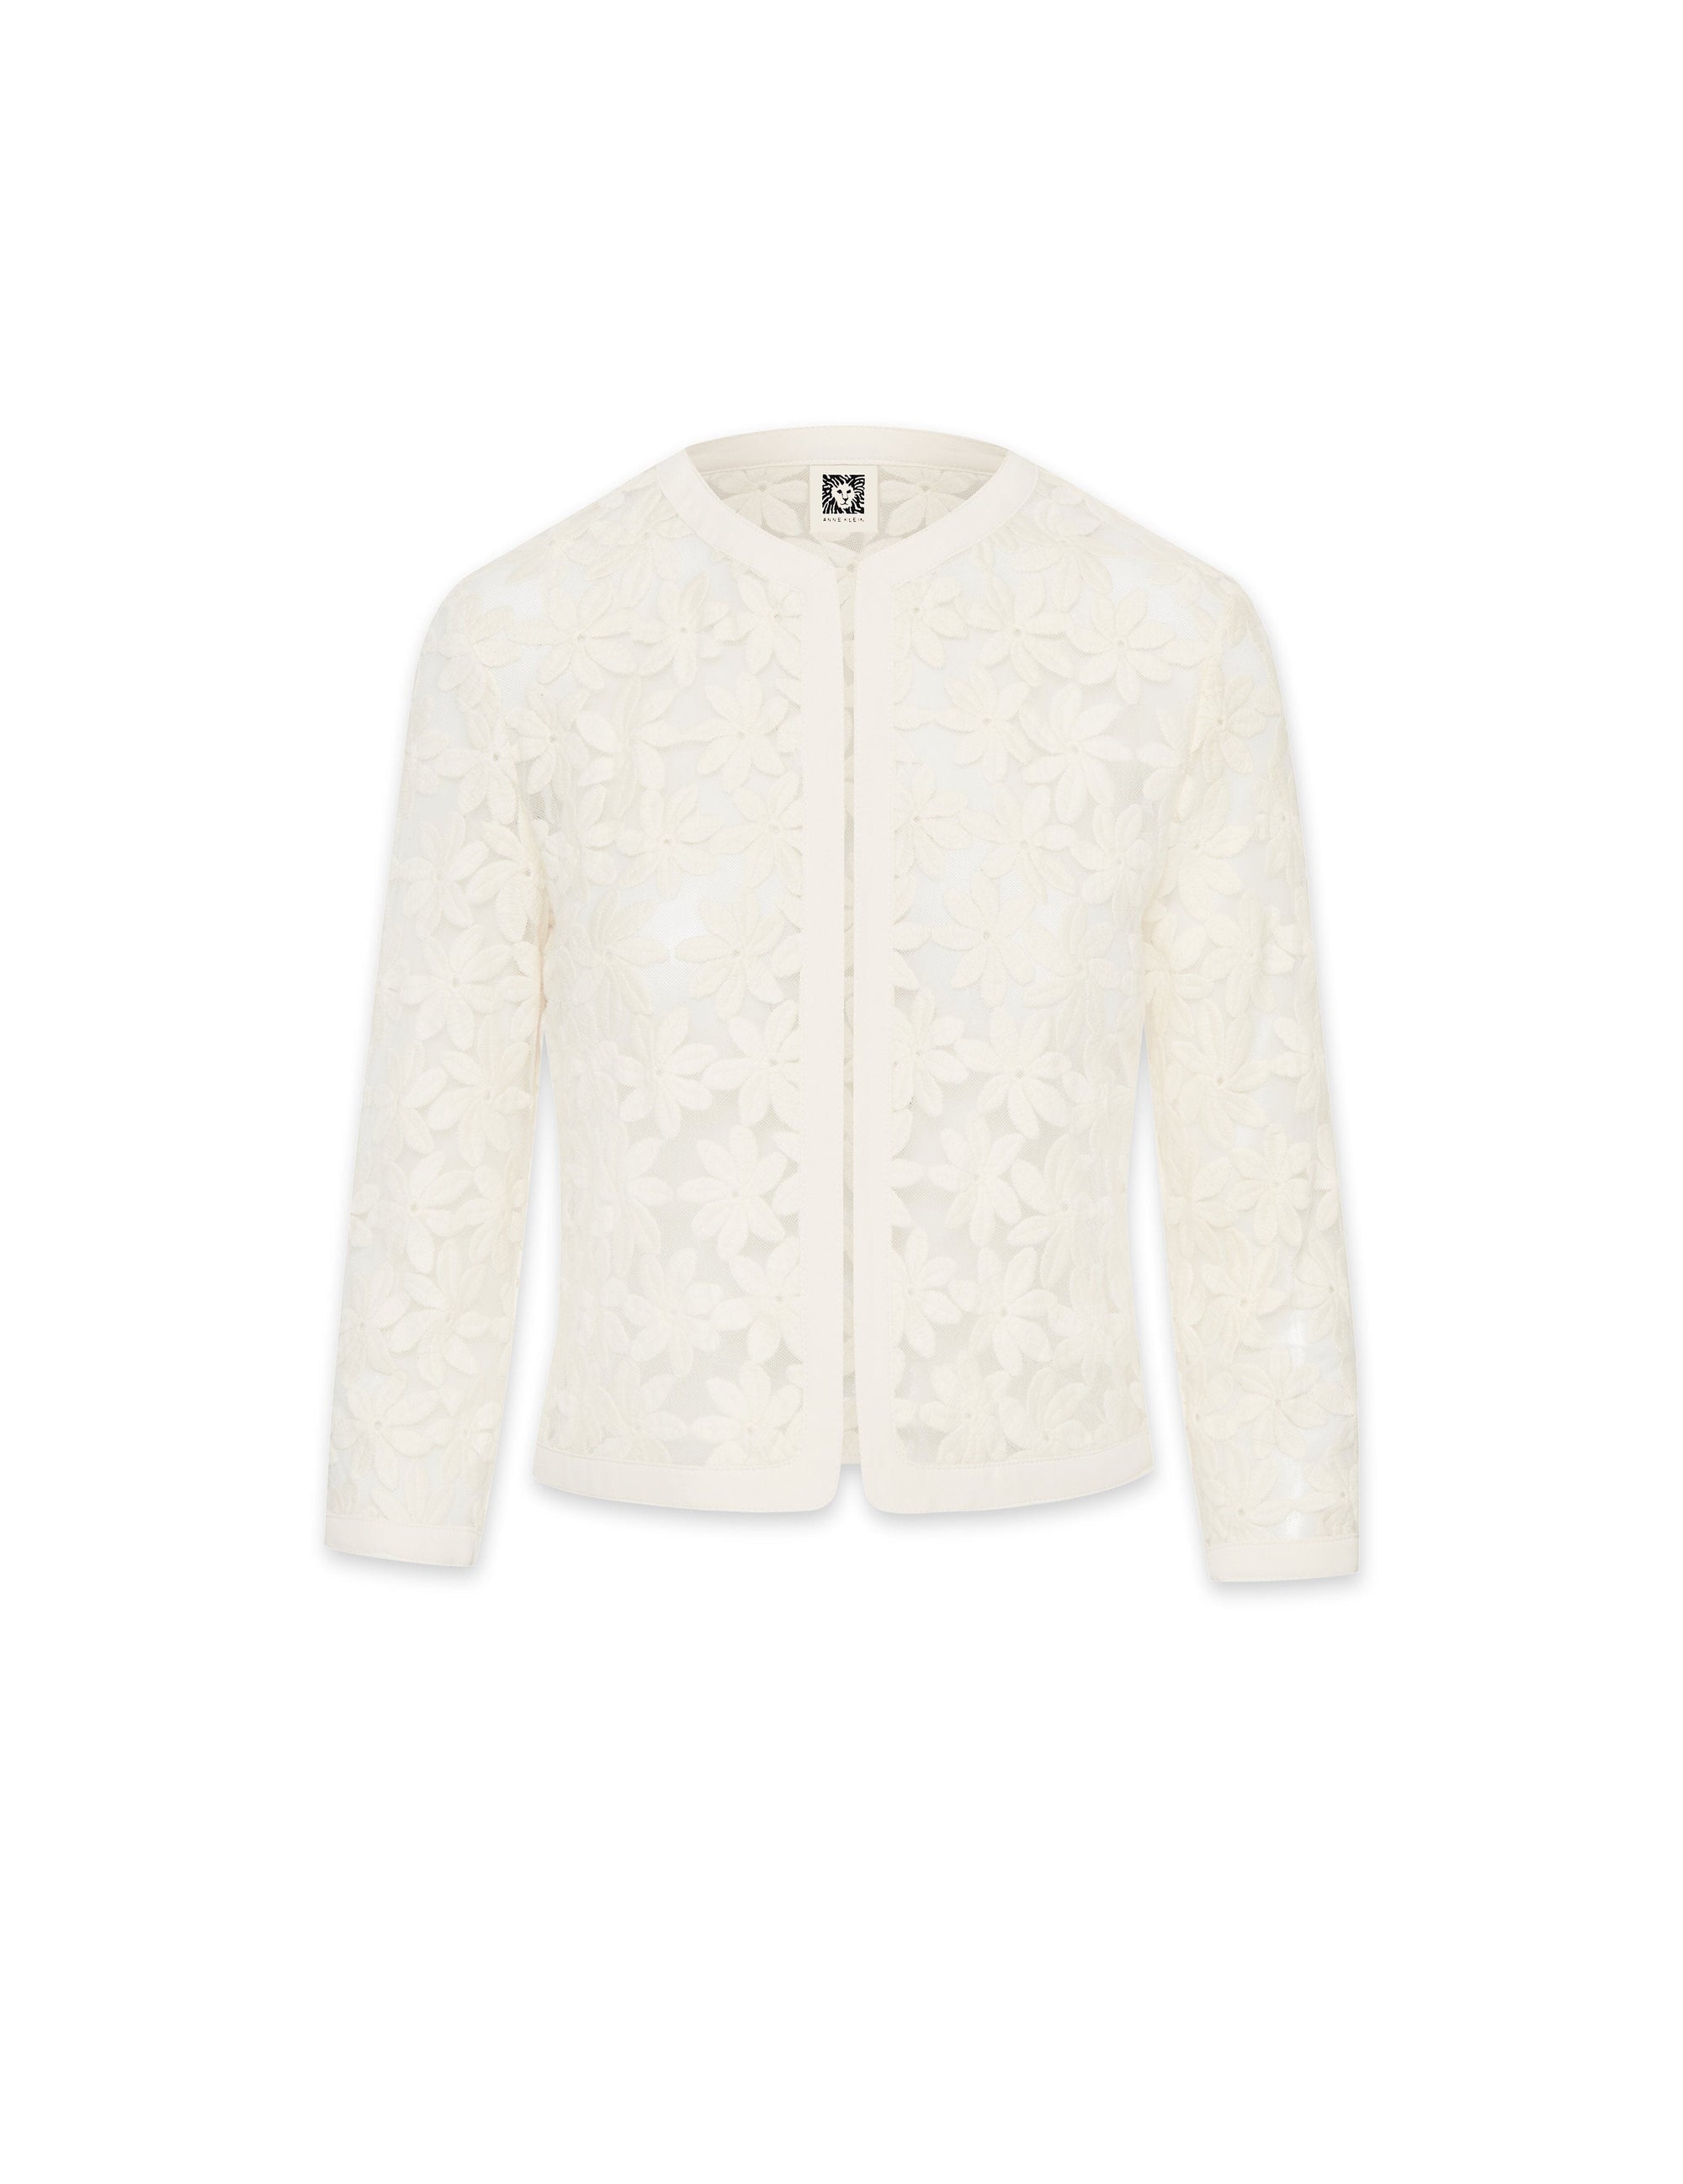 Anne Klein White Lace Cardigan Jacket With Trim